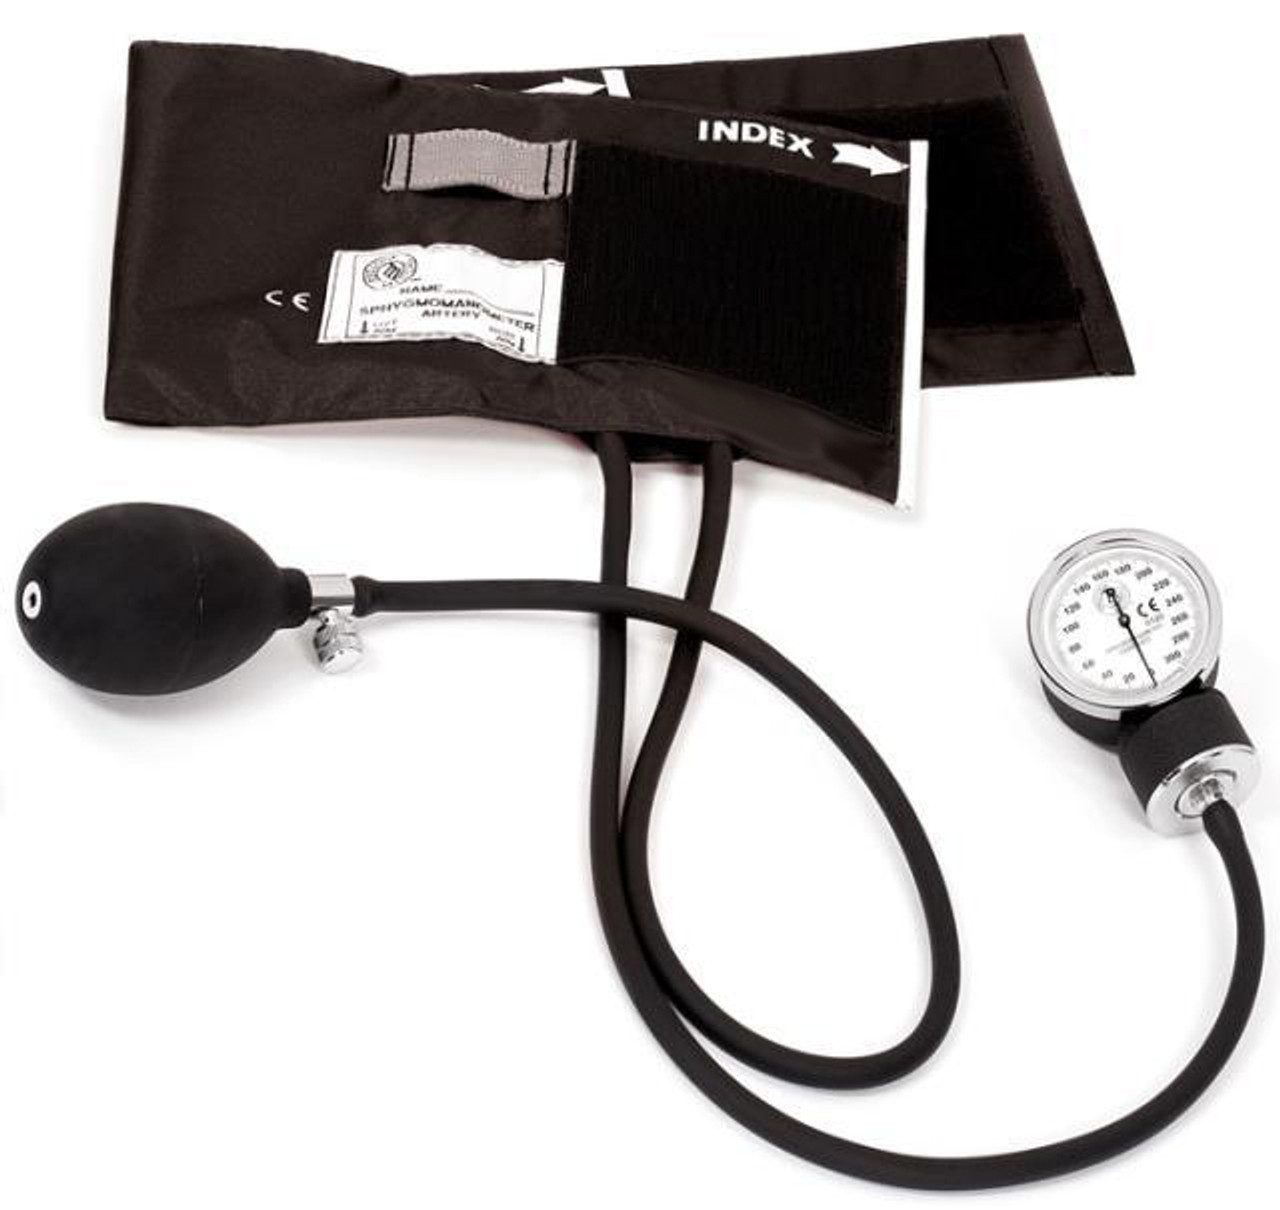  Pediatric Blood Pressure Cuff for Kids & Women - Small